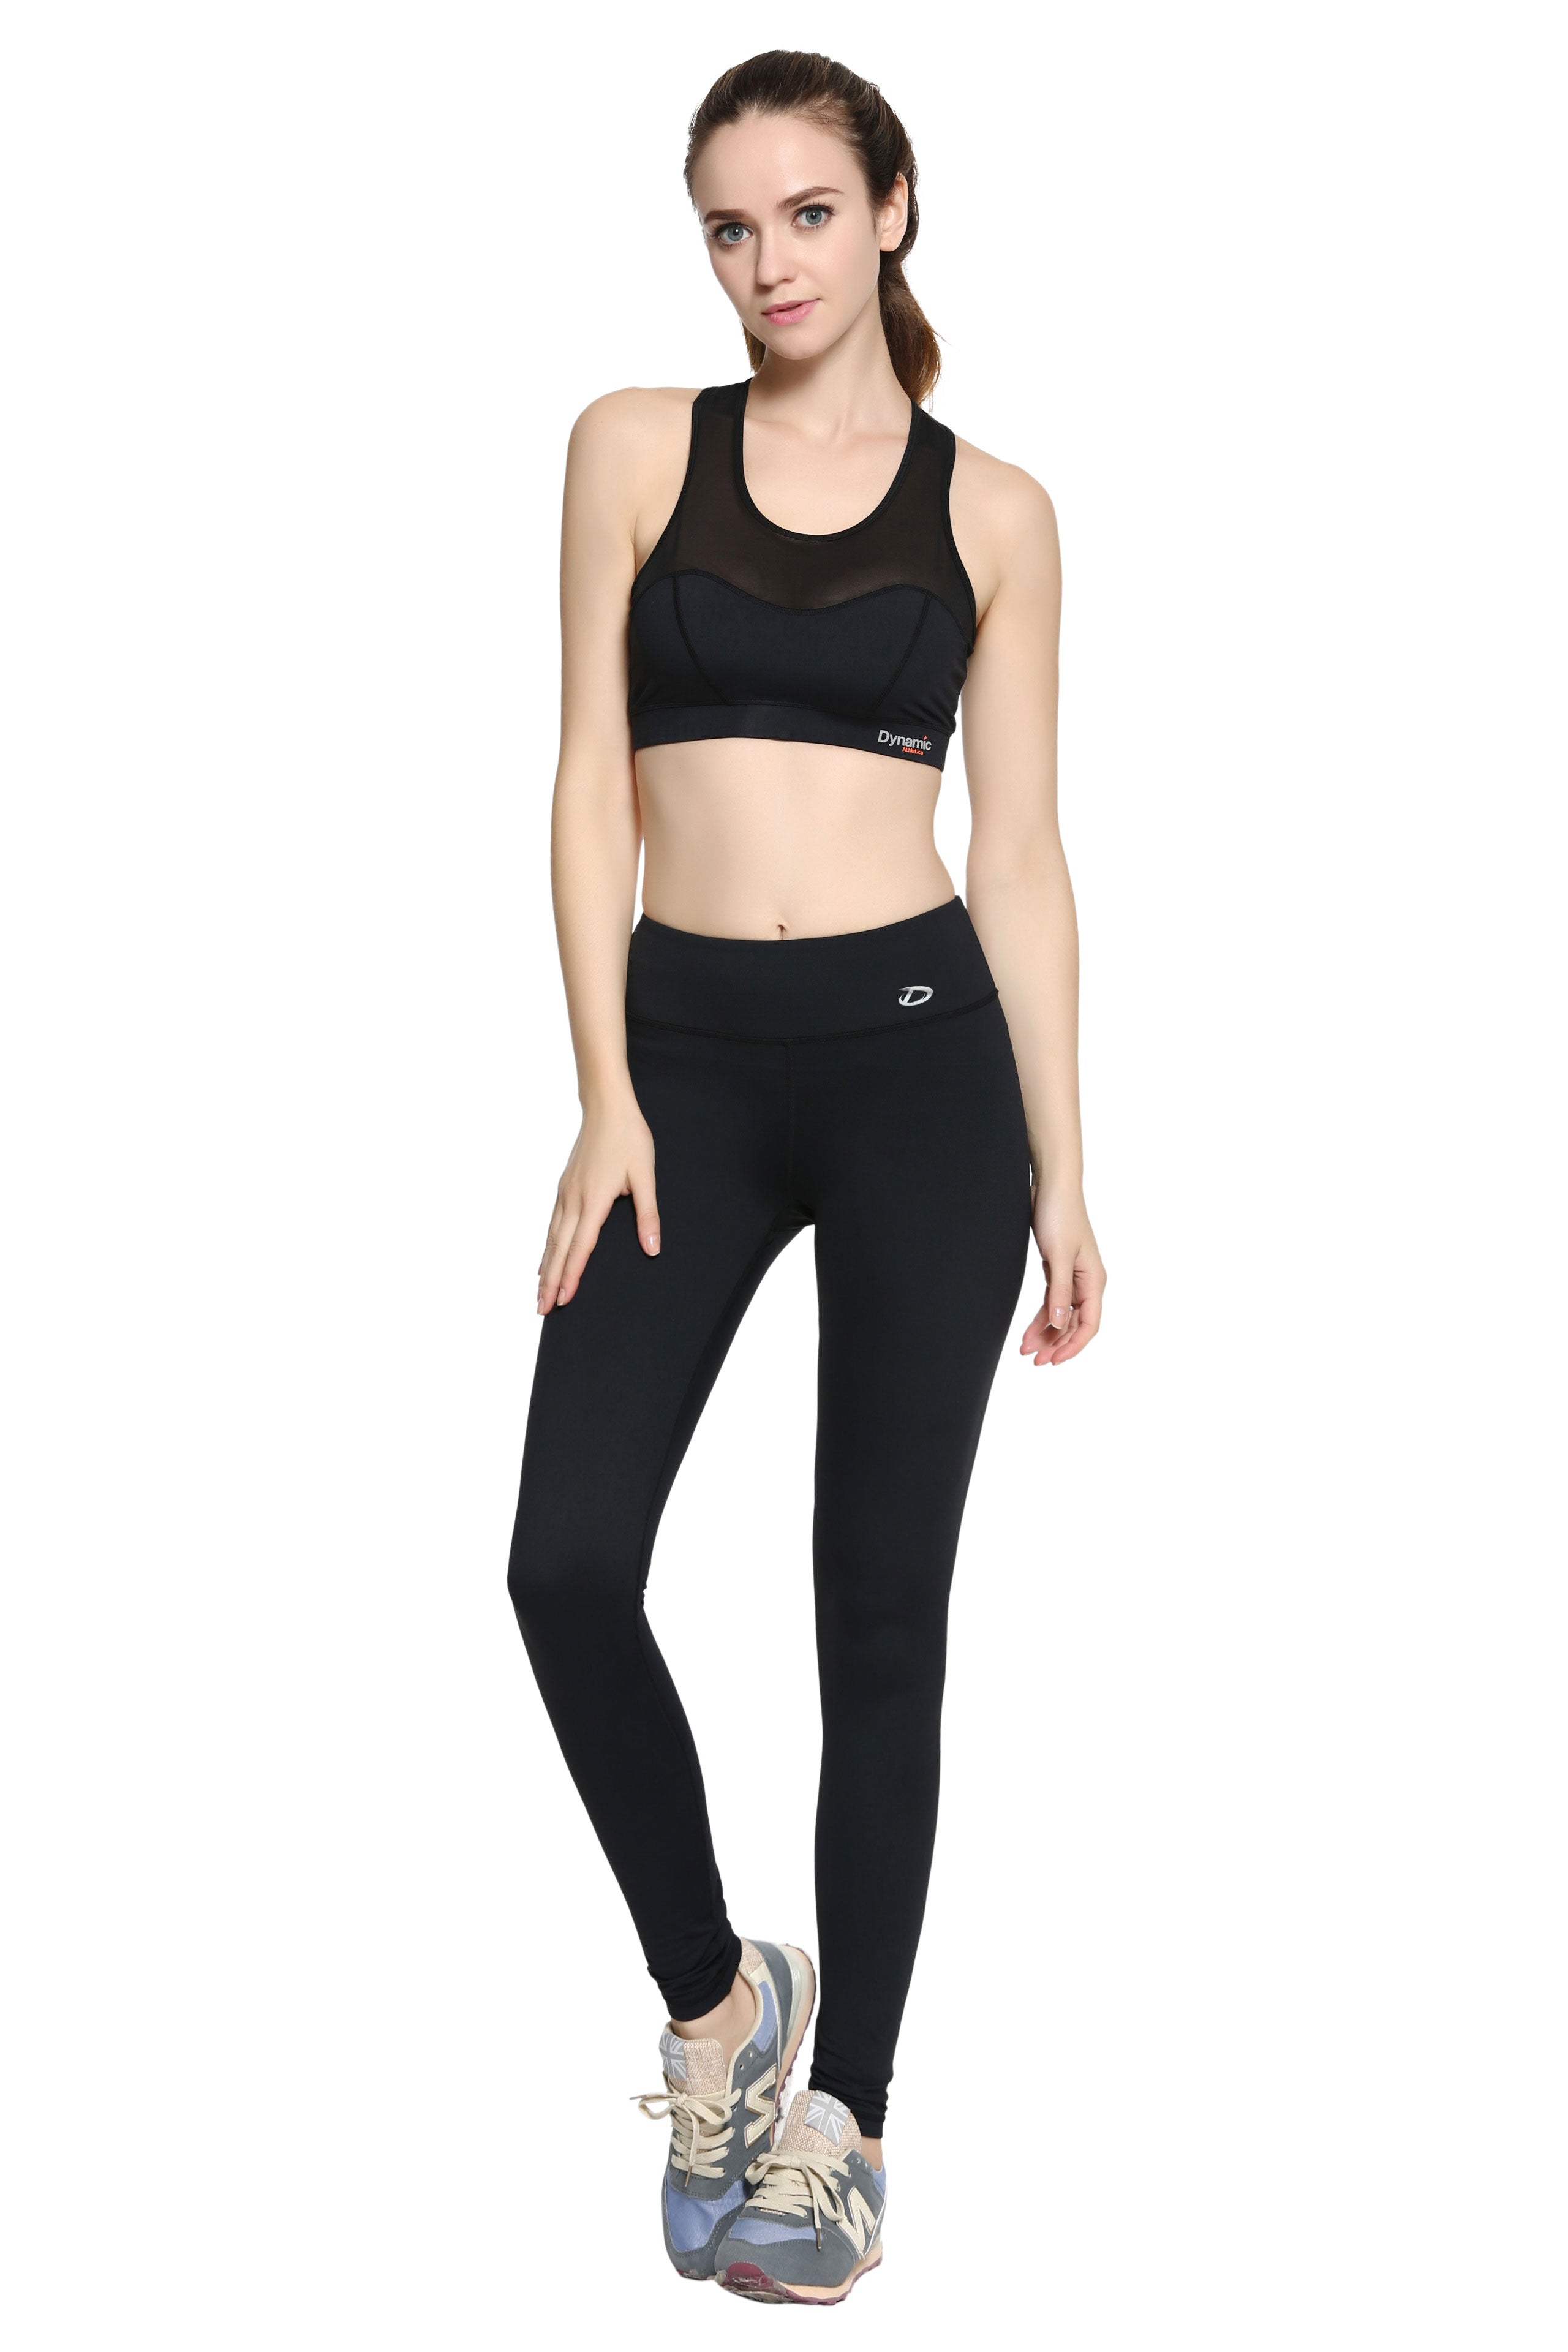 Women's Spandex Exercise Compression Workout Shorts Black X-Large